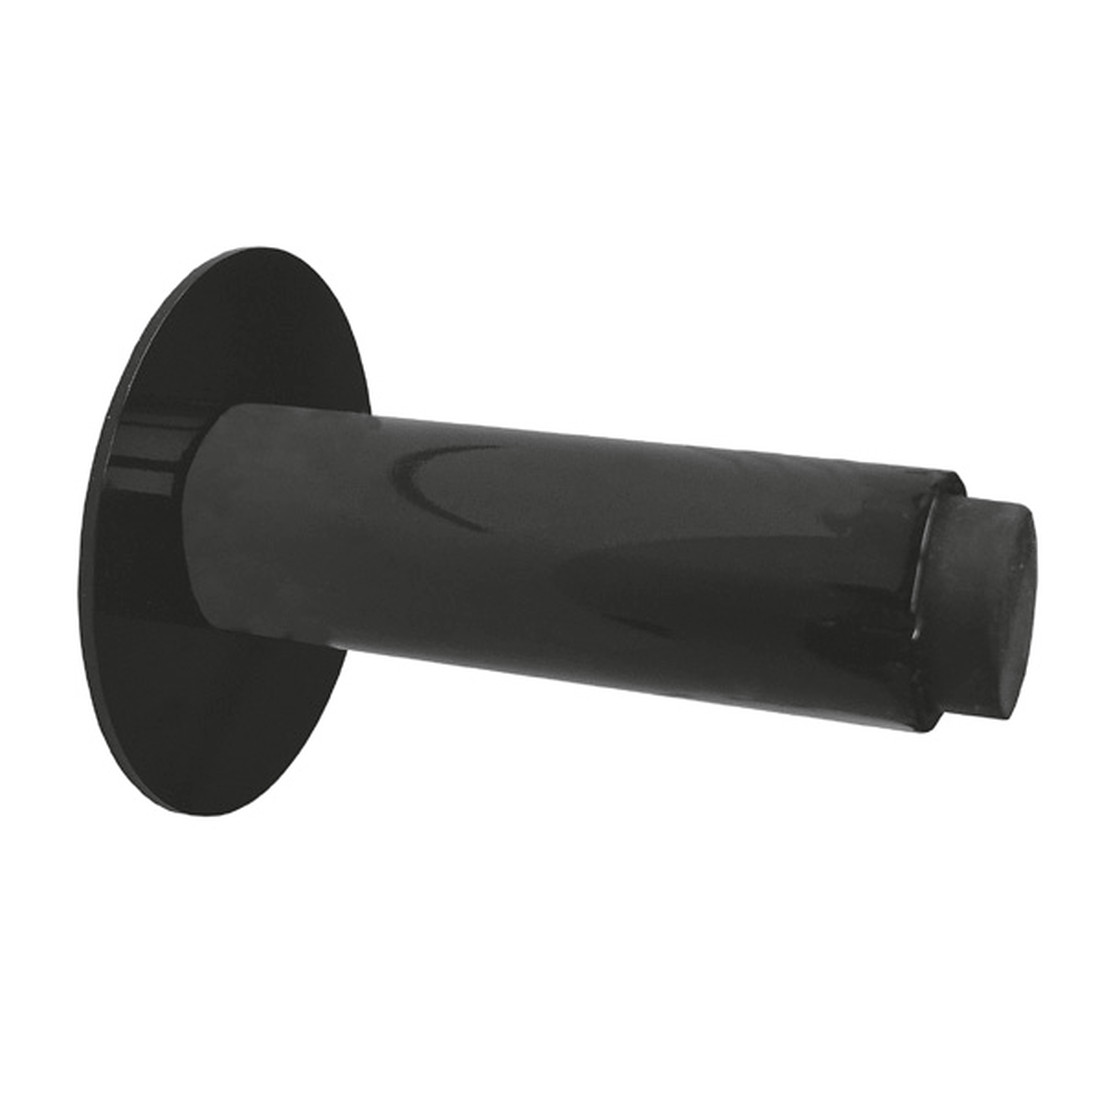 Door stopper, black, round, ø 18mm, with wall plate, ø 35mm, hanger bolt